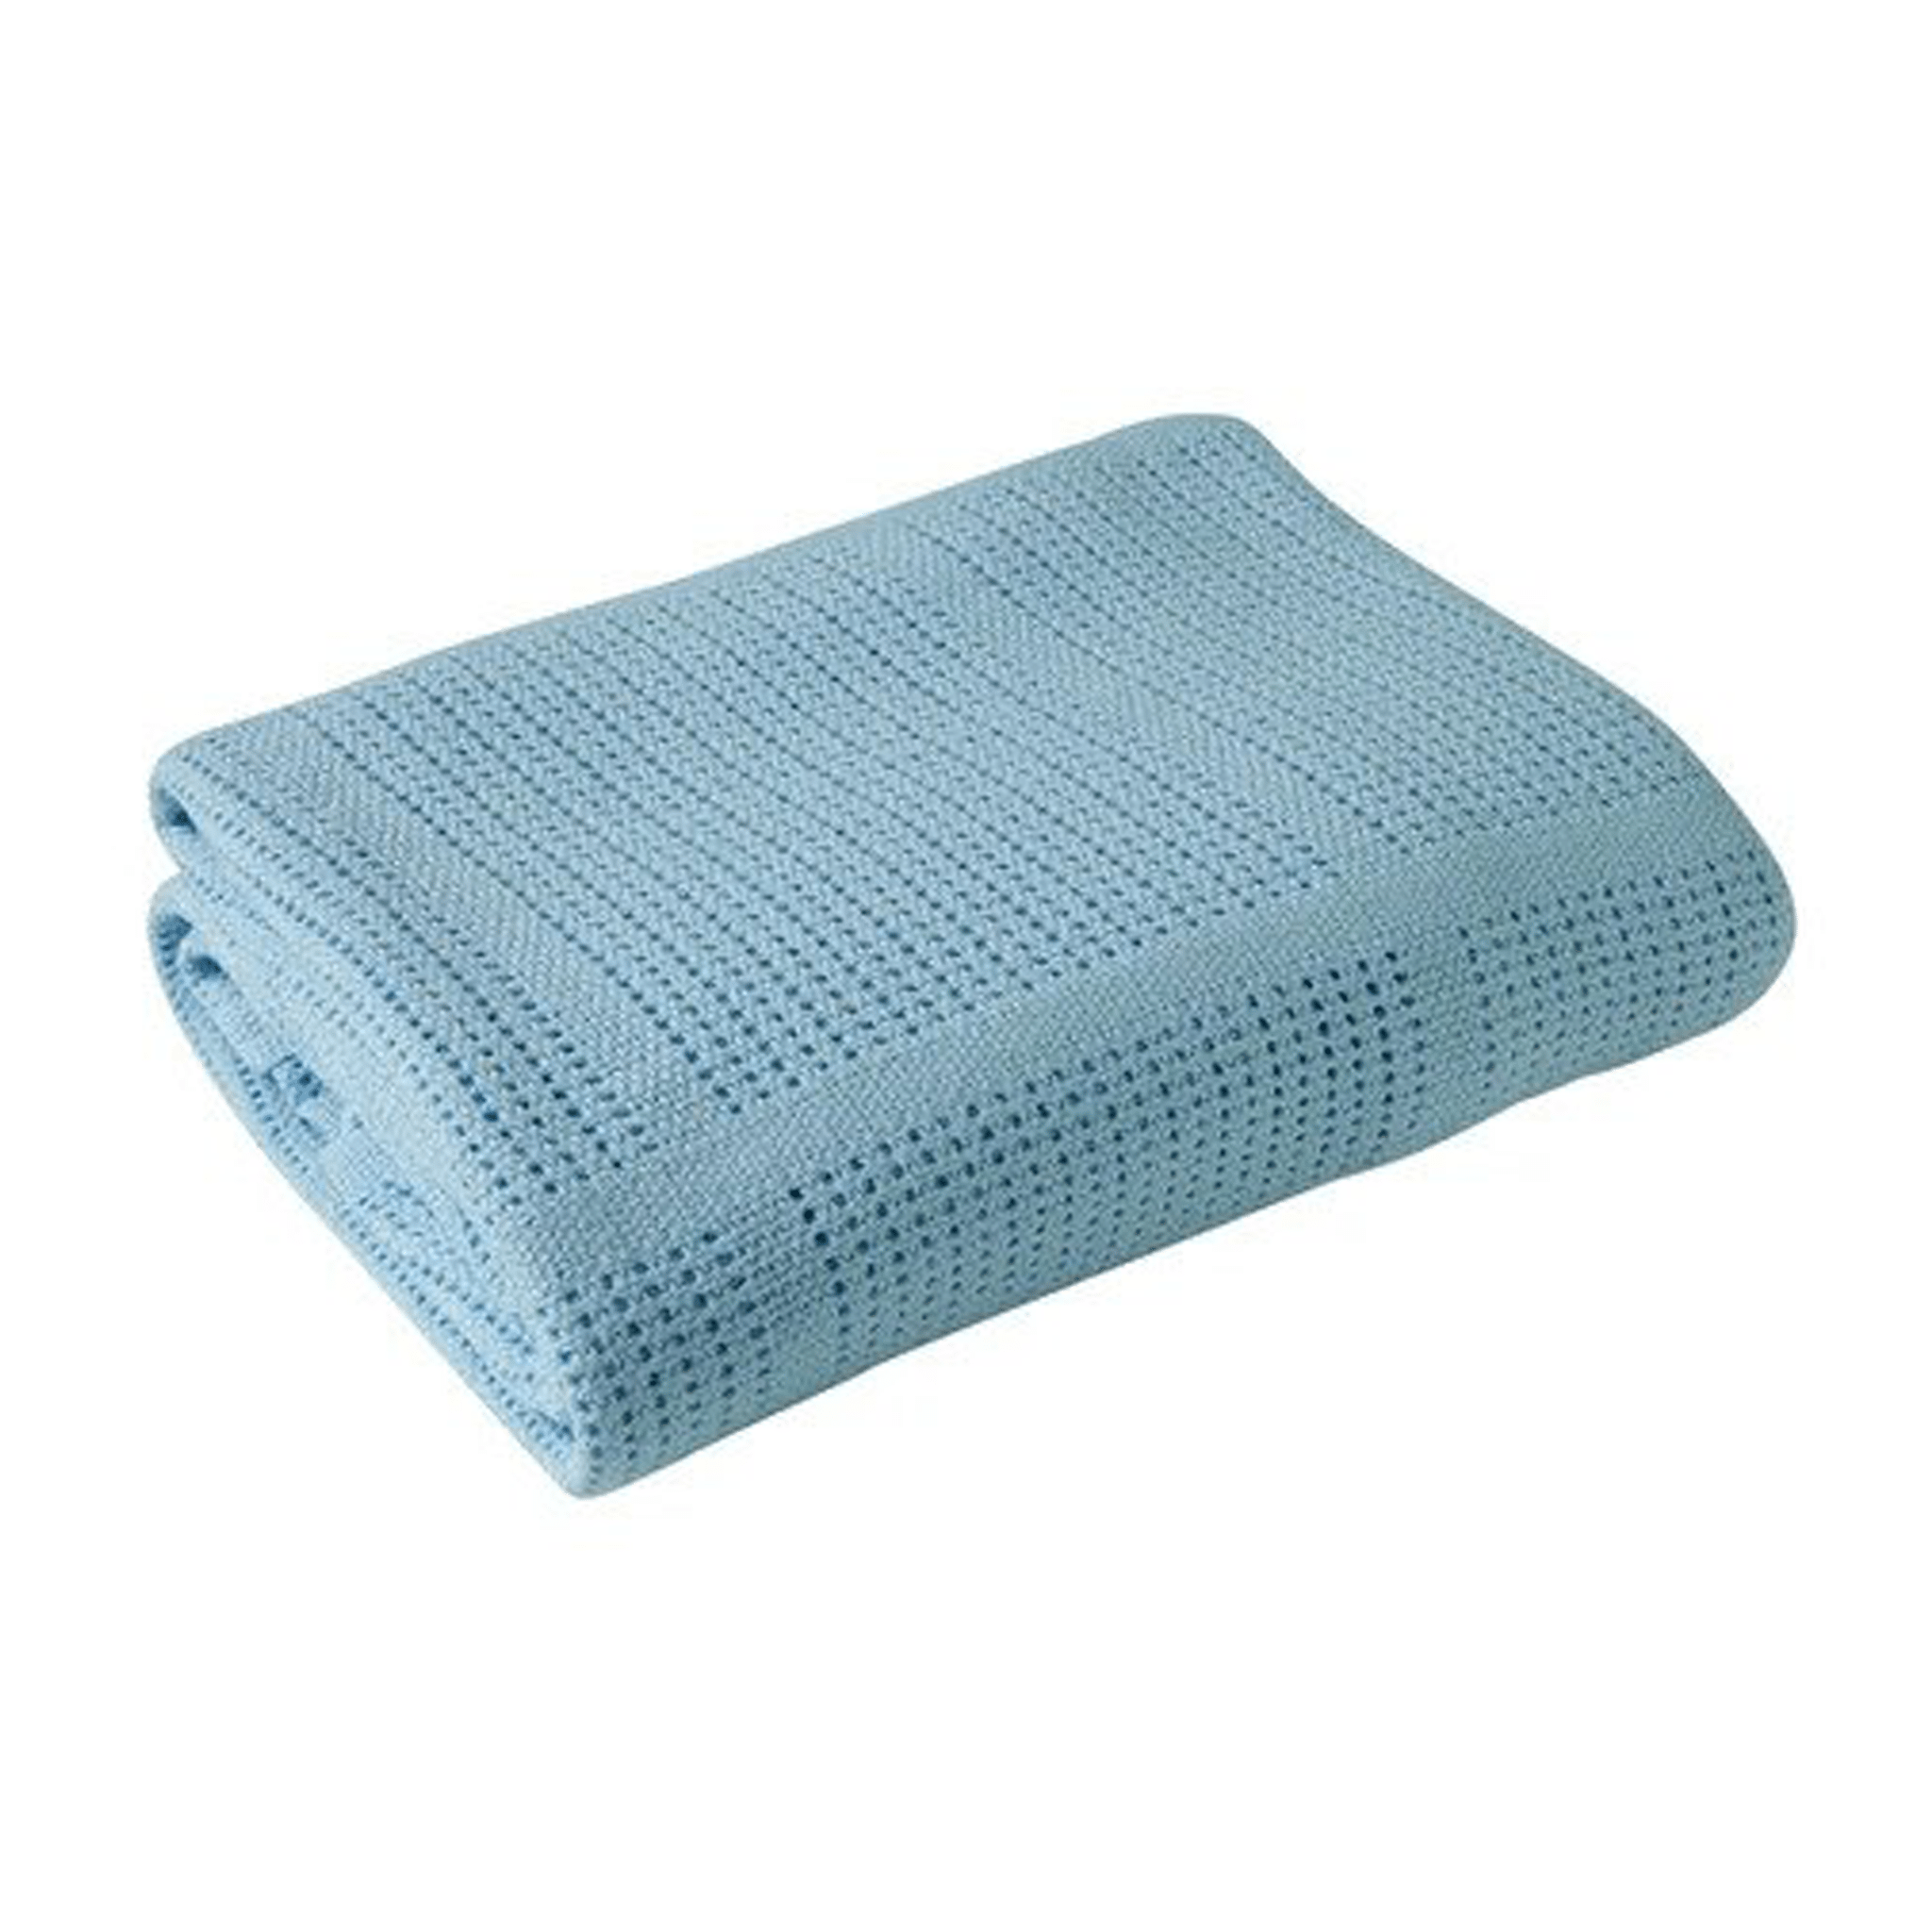 Clair De Lune Cellular Cot Blanket Blue Cot & Cot Bed Blankets CL4984BE 5033775201605